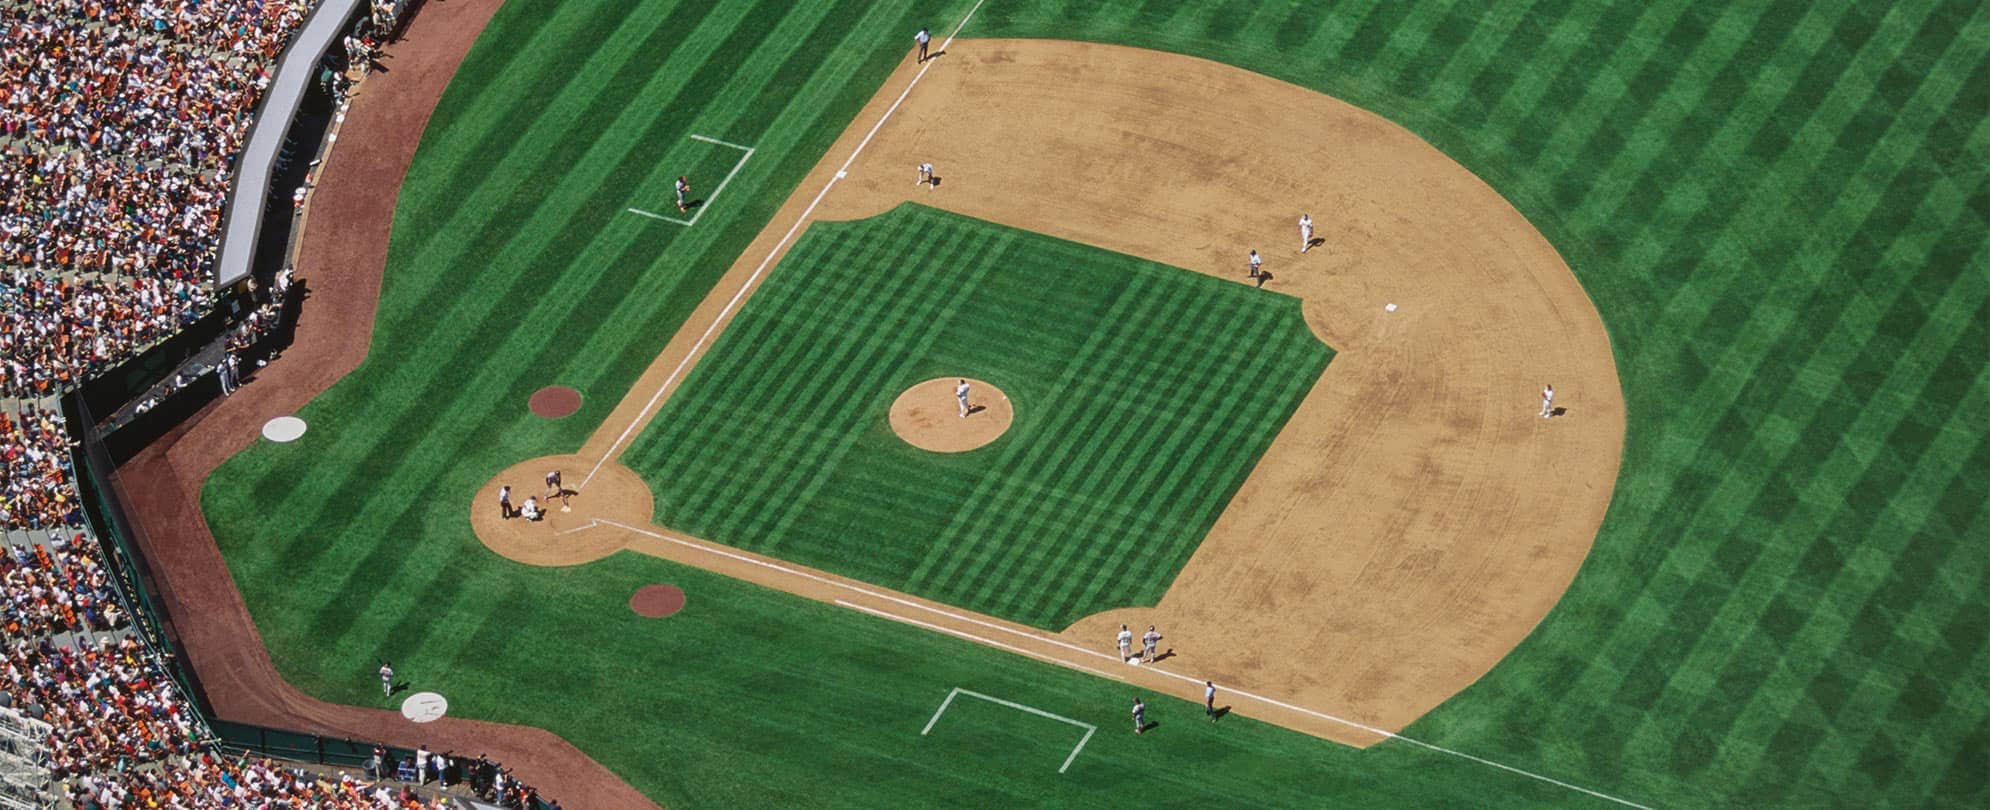 A baseball diamond from above at an Los Angeles Angels baseball game.